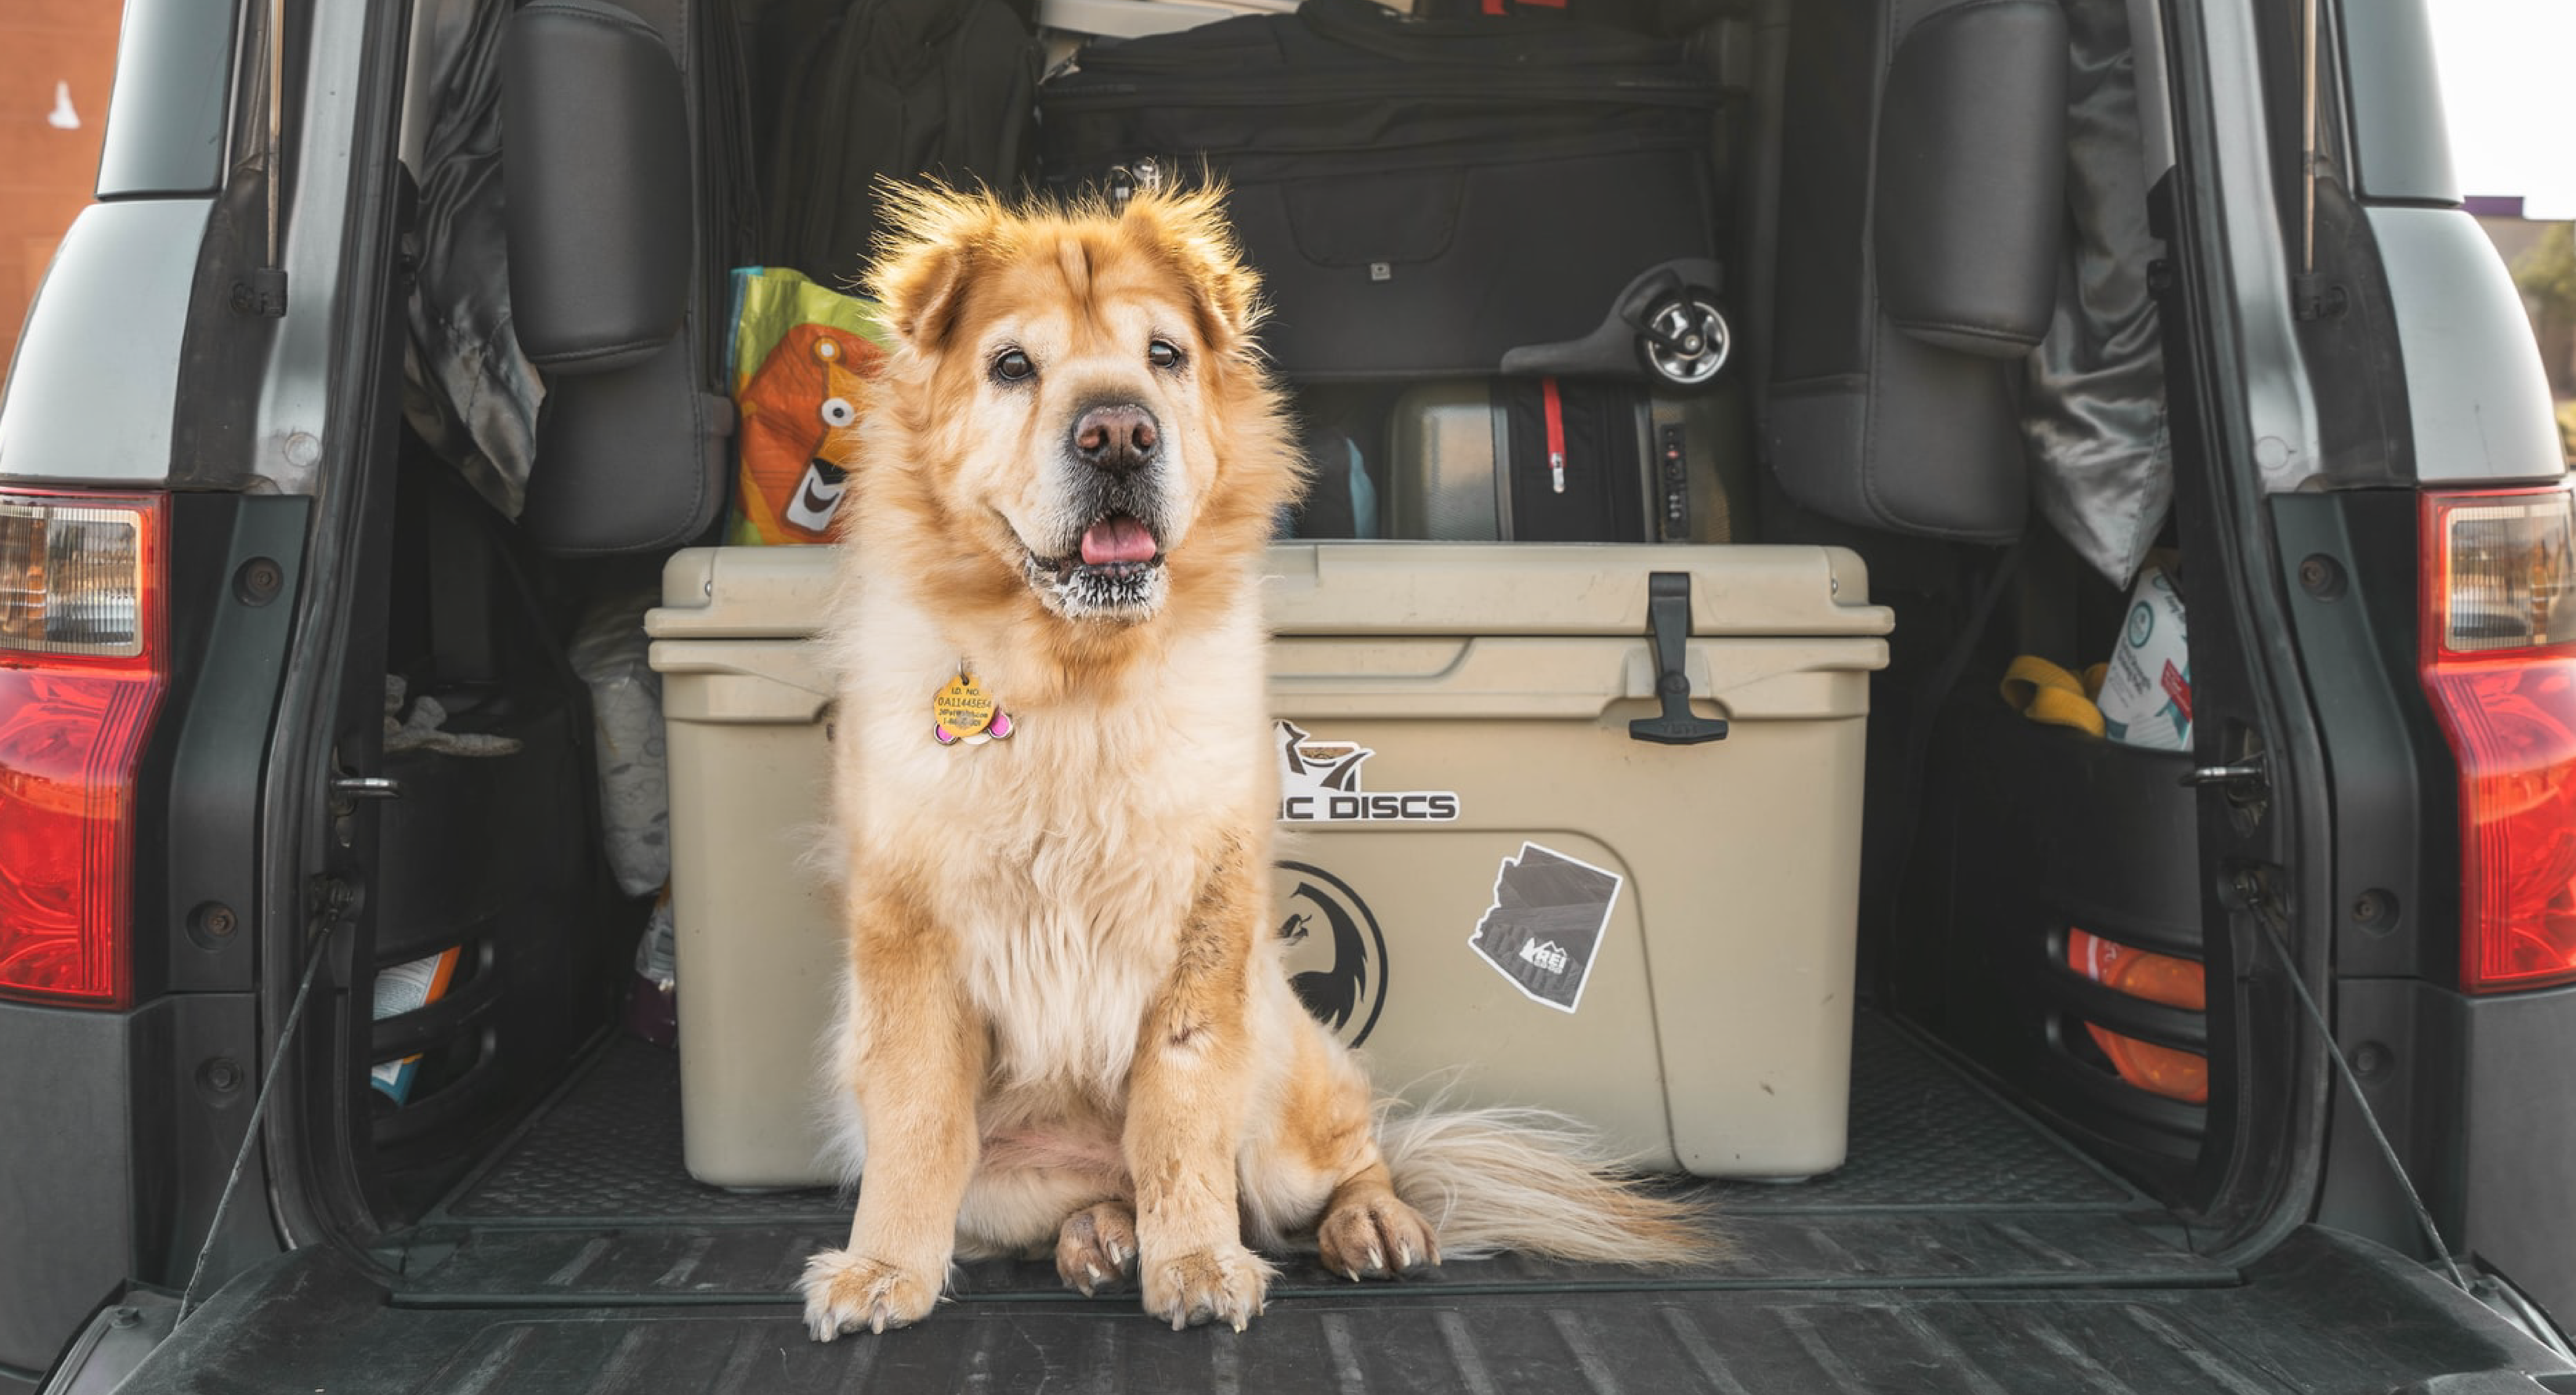 Dog Sitting in Back of Car - Toggle Insurance Pet Passenger